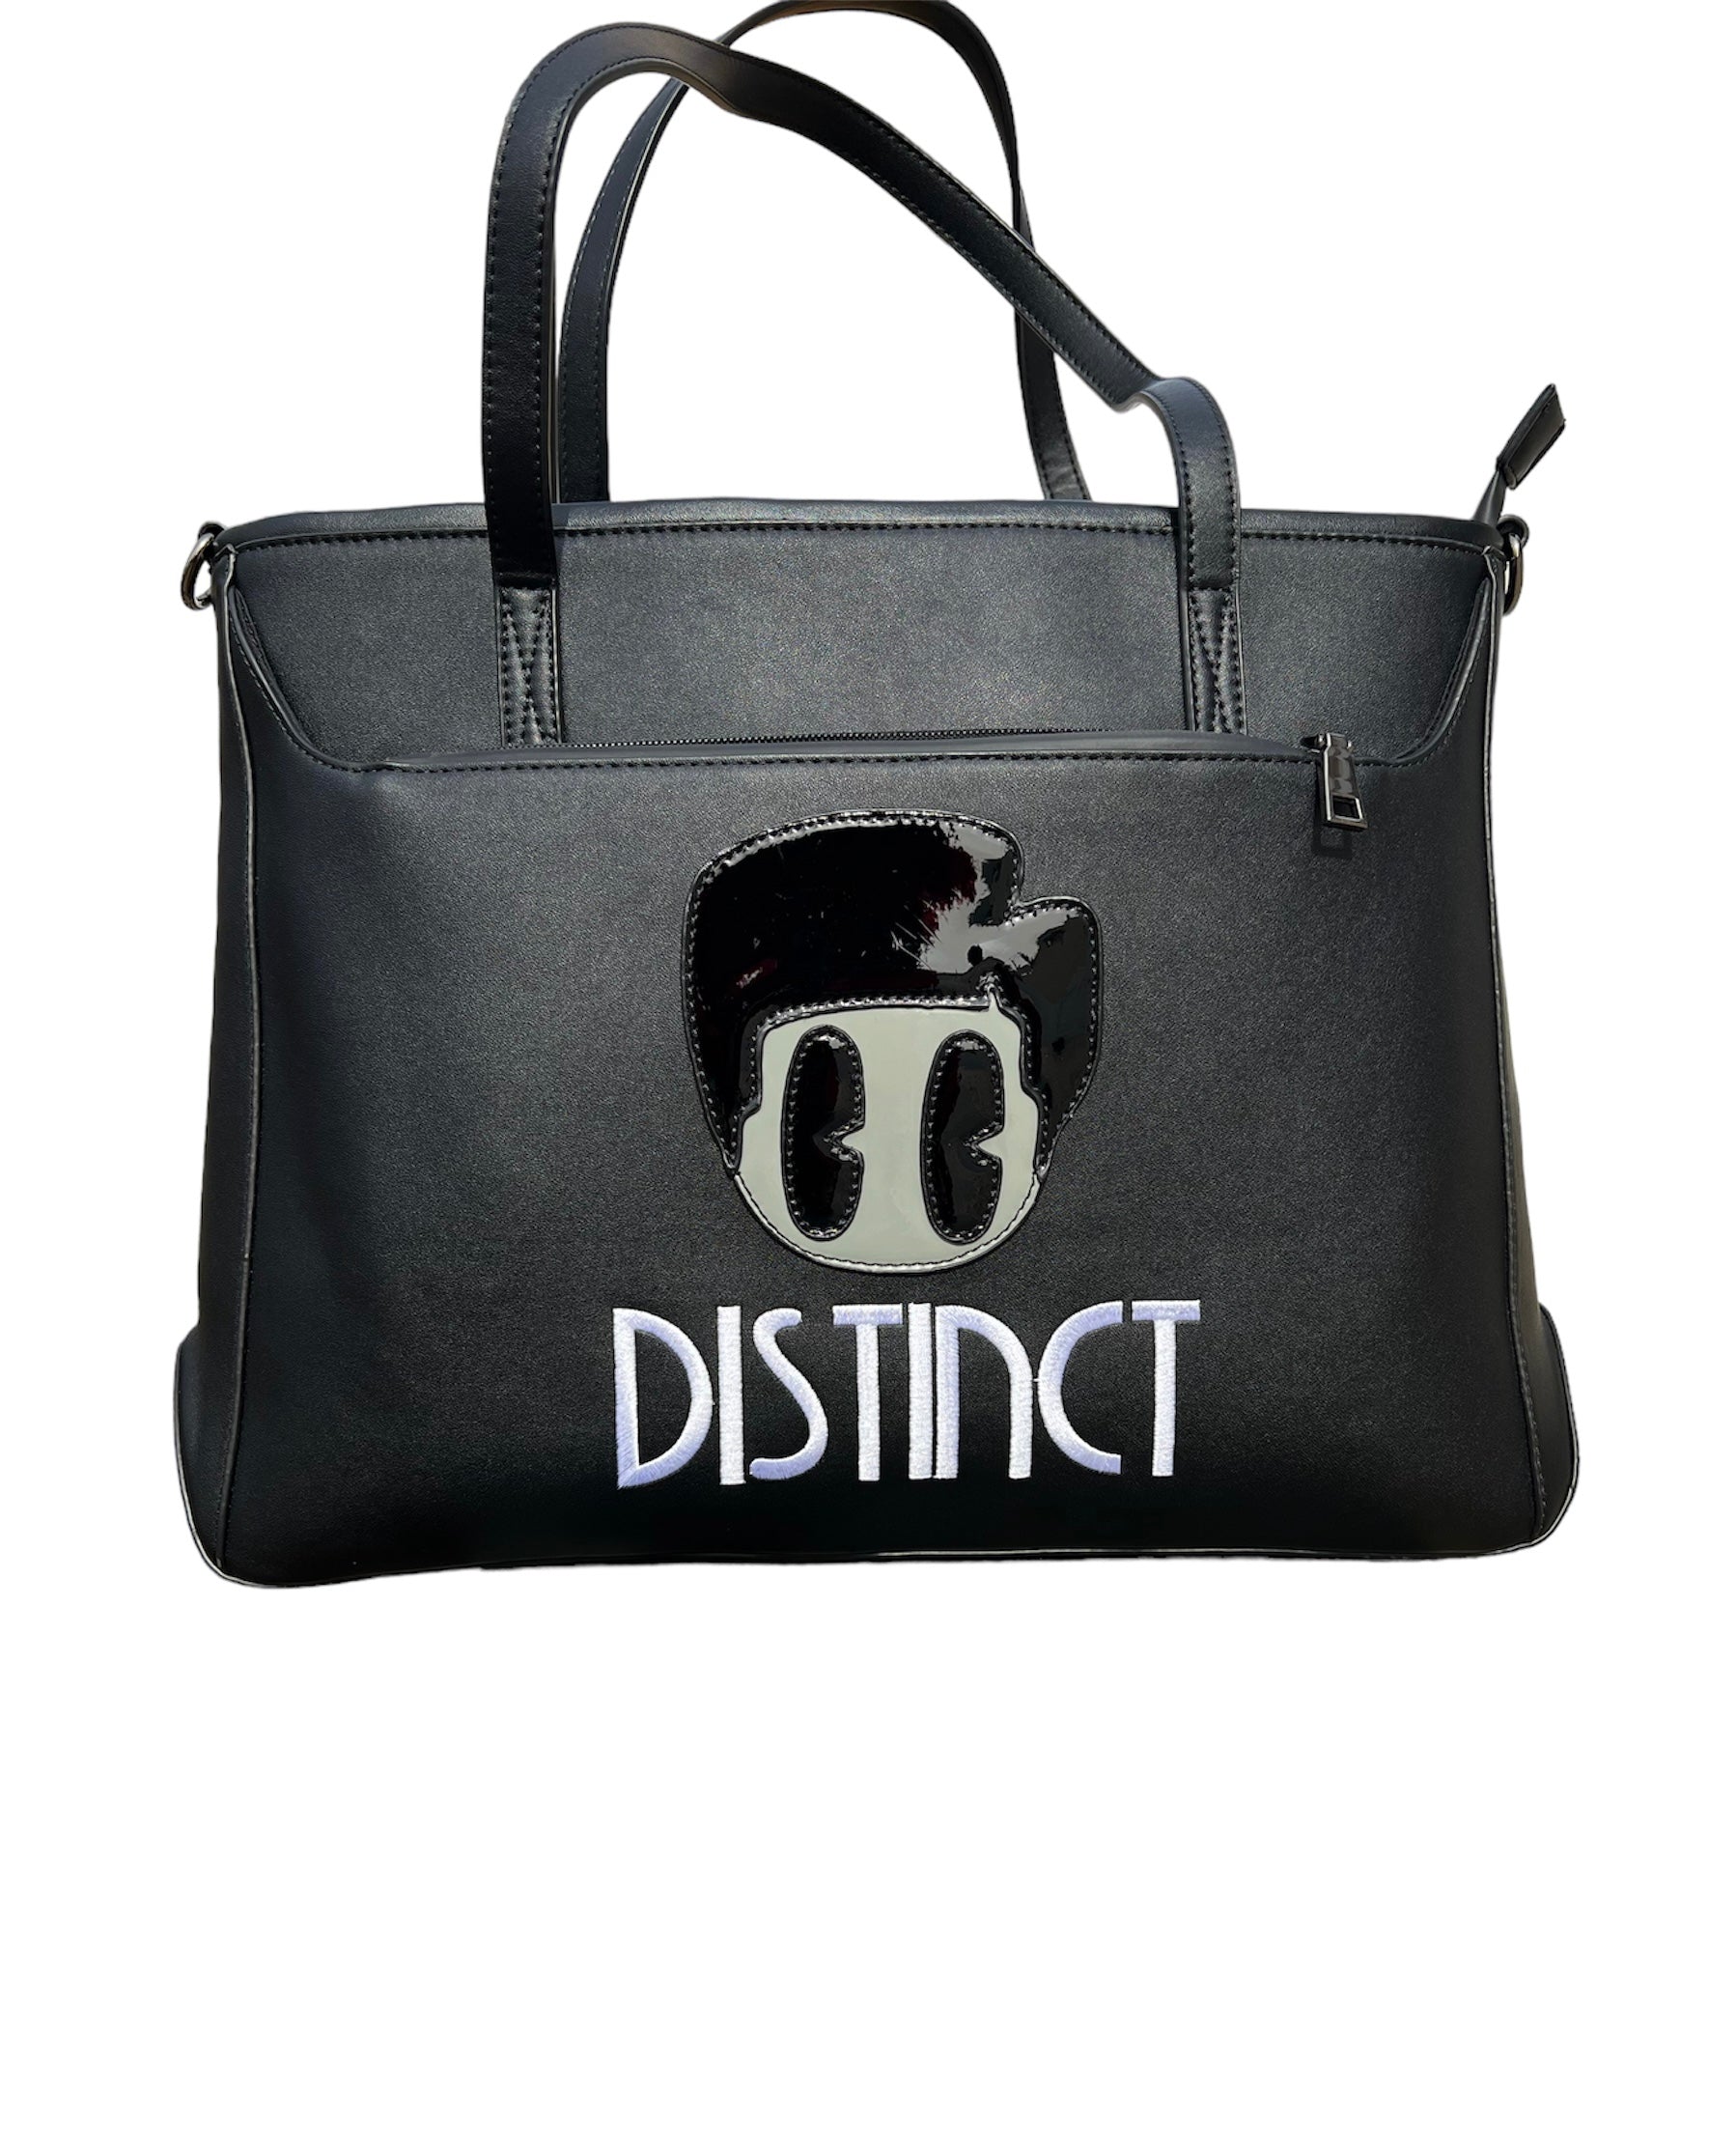 DisTote Bag